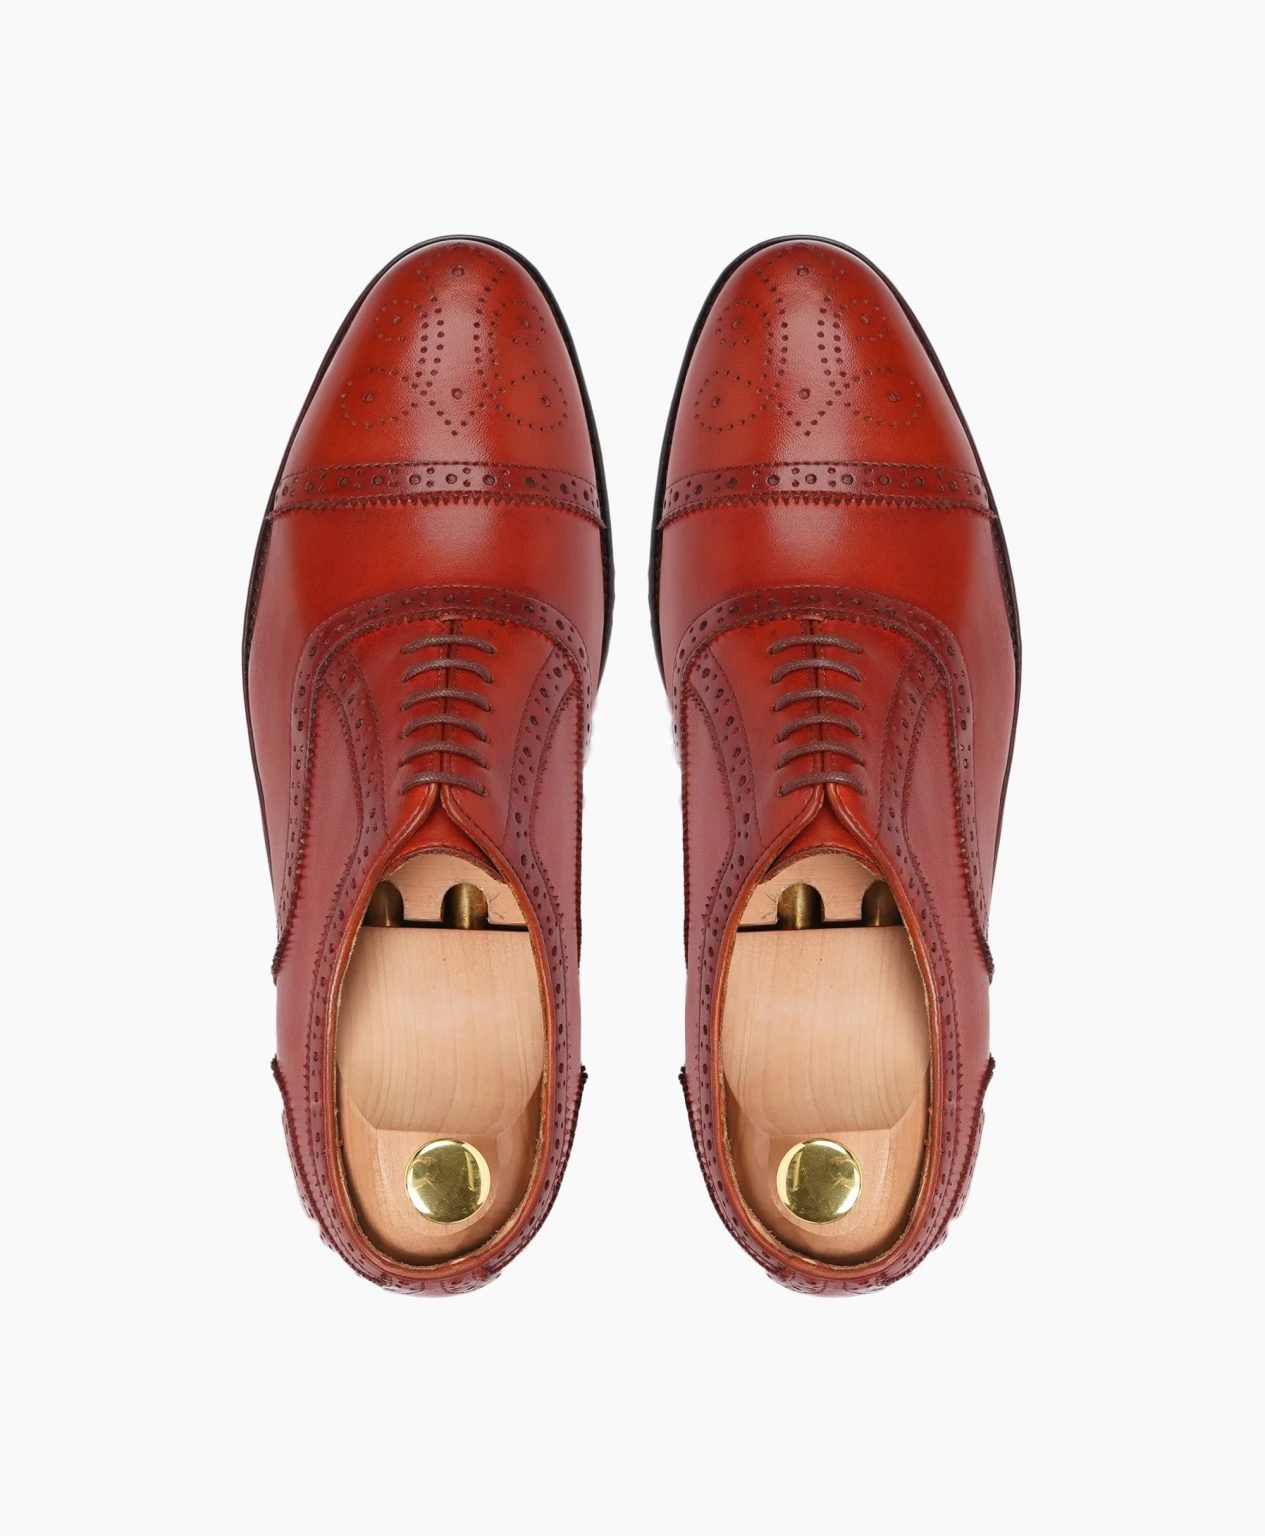 saltash-oxford-orange-tan-leather-shoes-image202